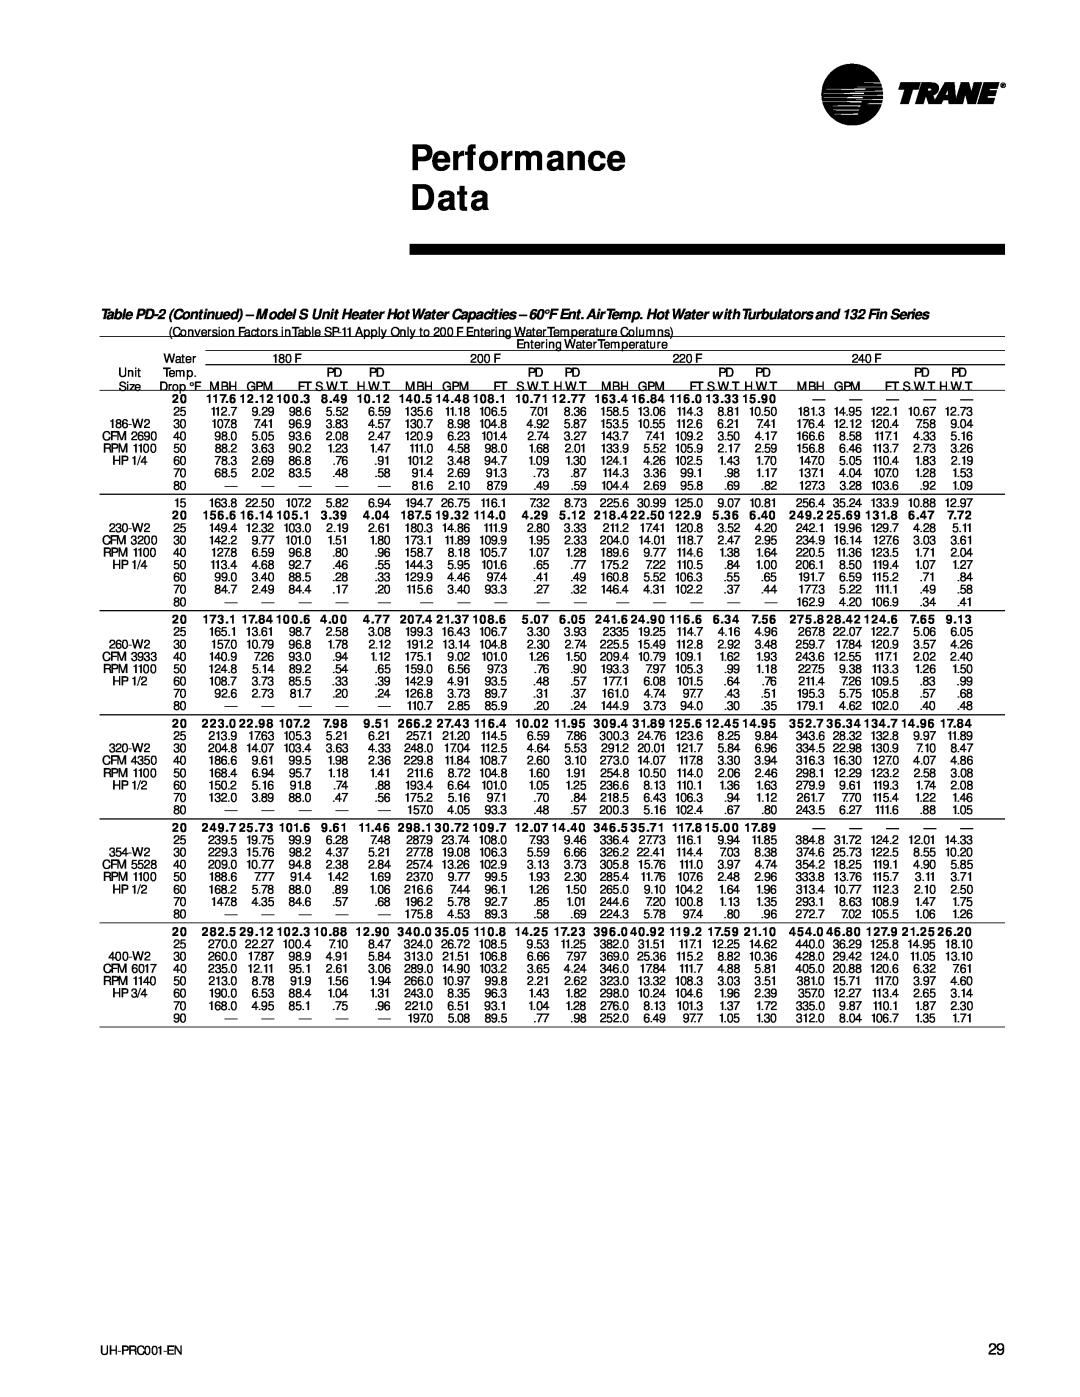 Trane UH-PRC001-EN manual Performance Data, 117.6 